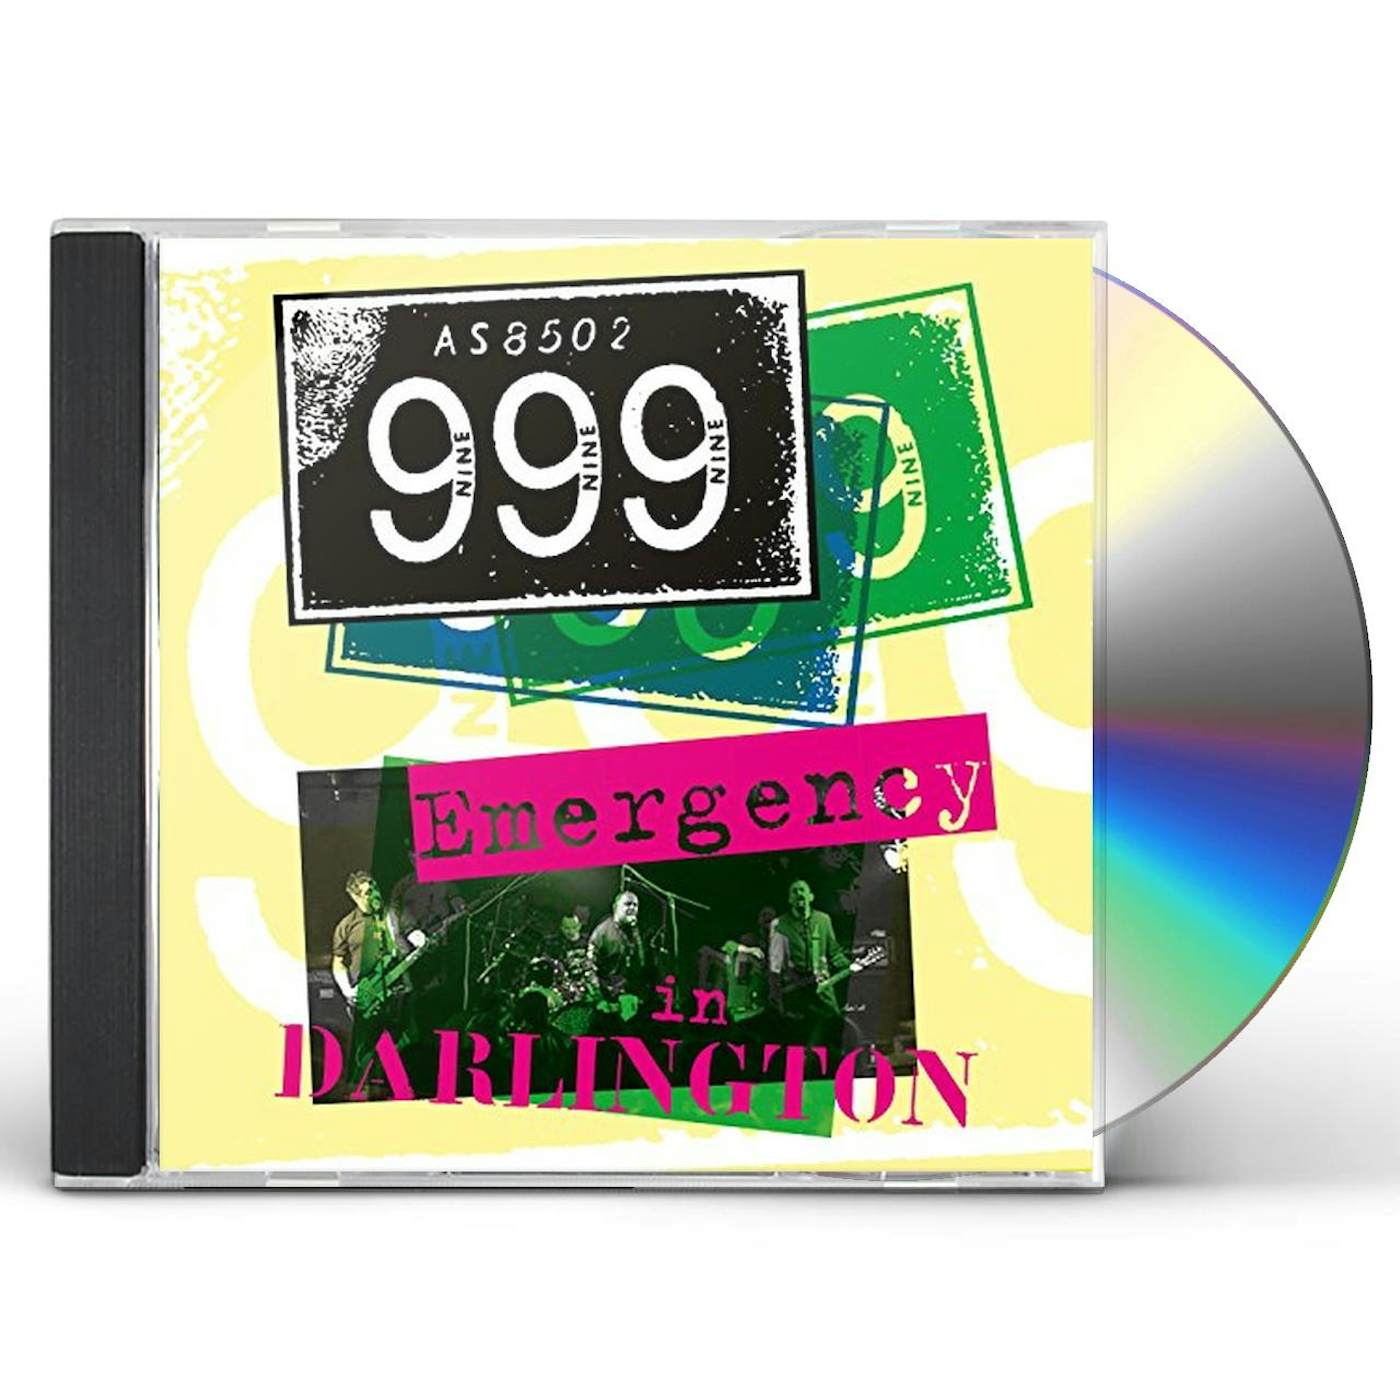 999 EMERGENCY IN DARLINGTON CD